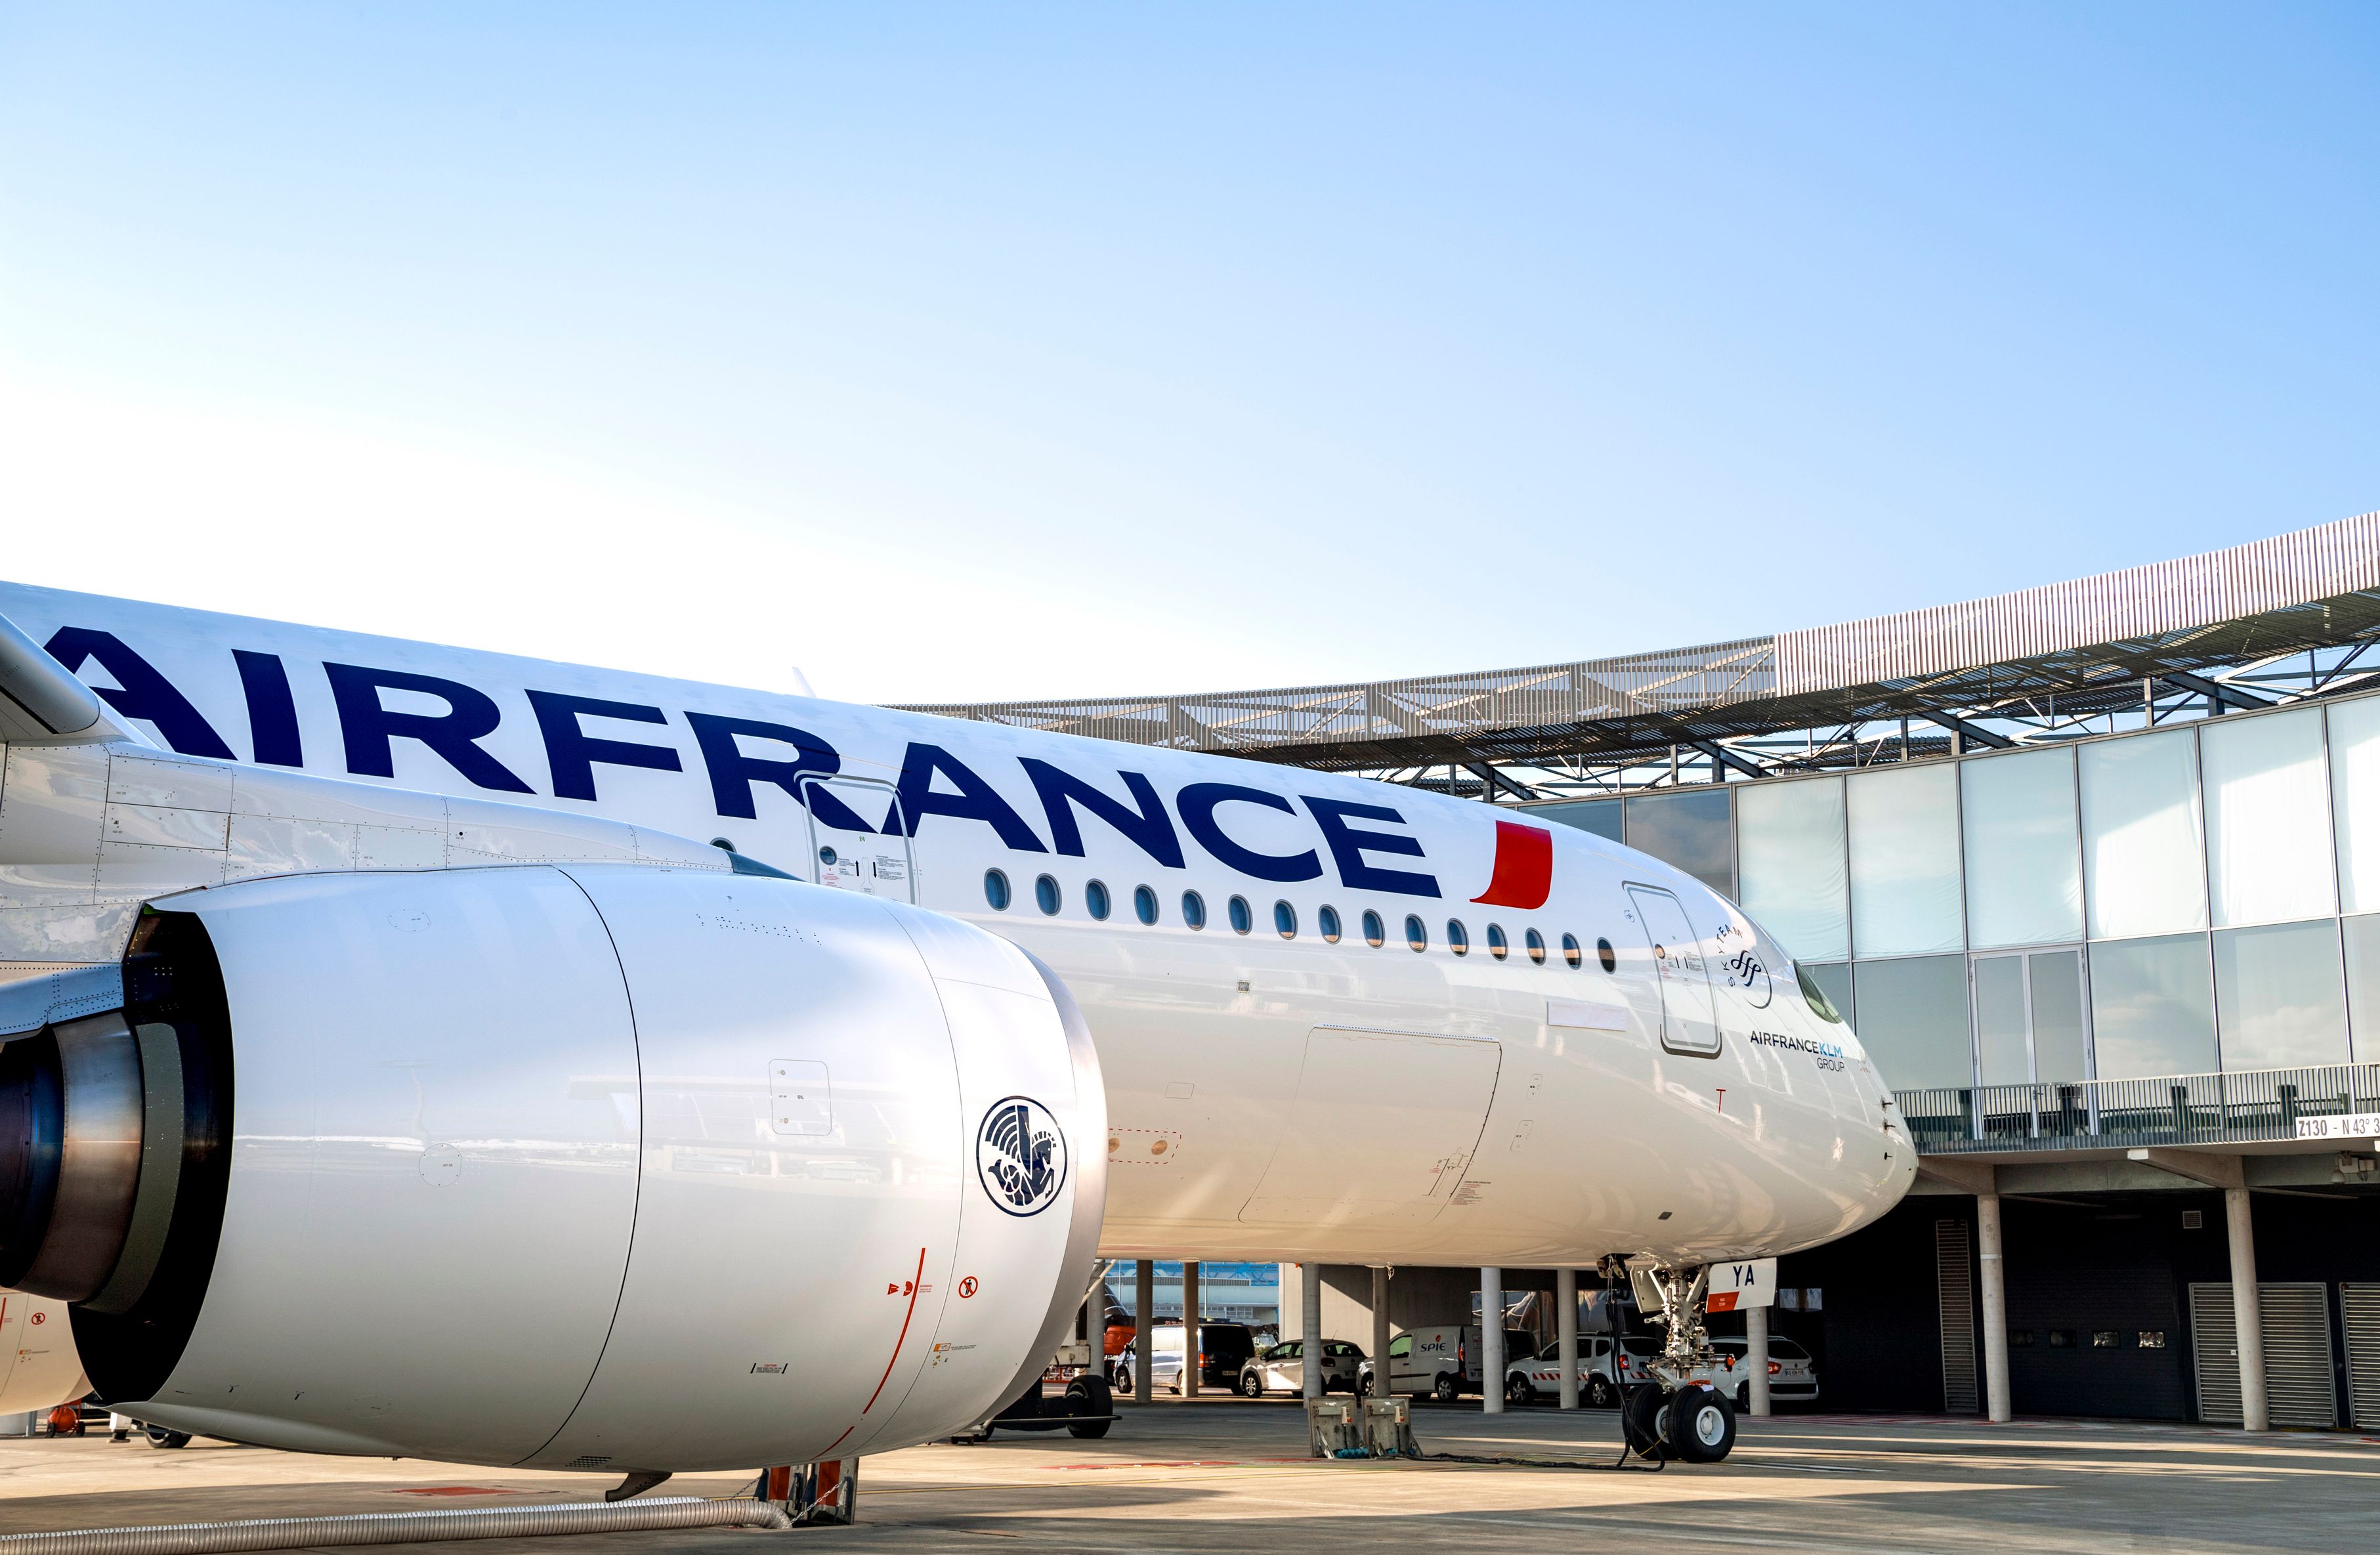 An Air France Airbus A350 parked at an airport gate.